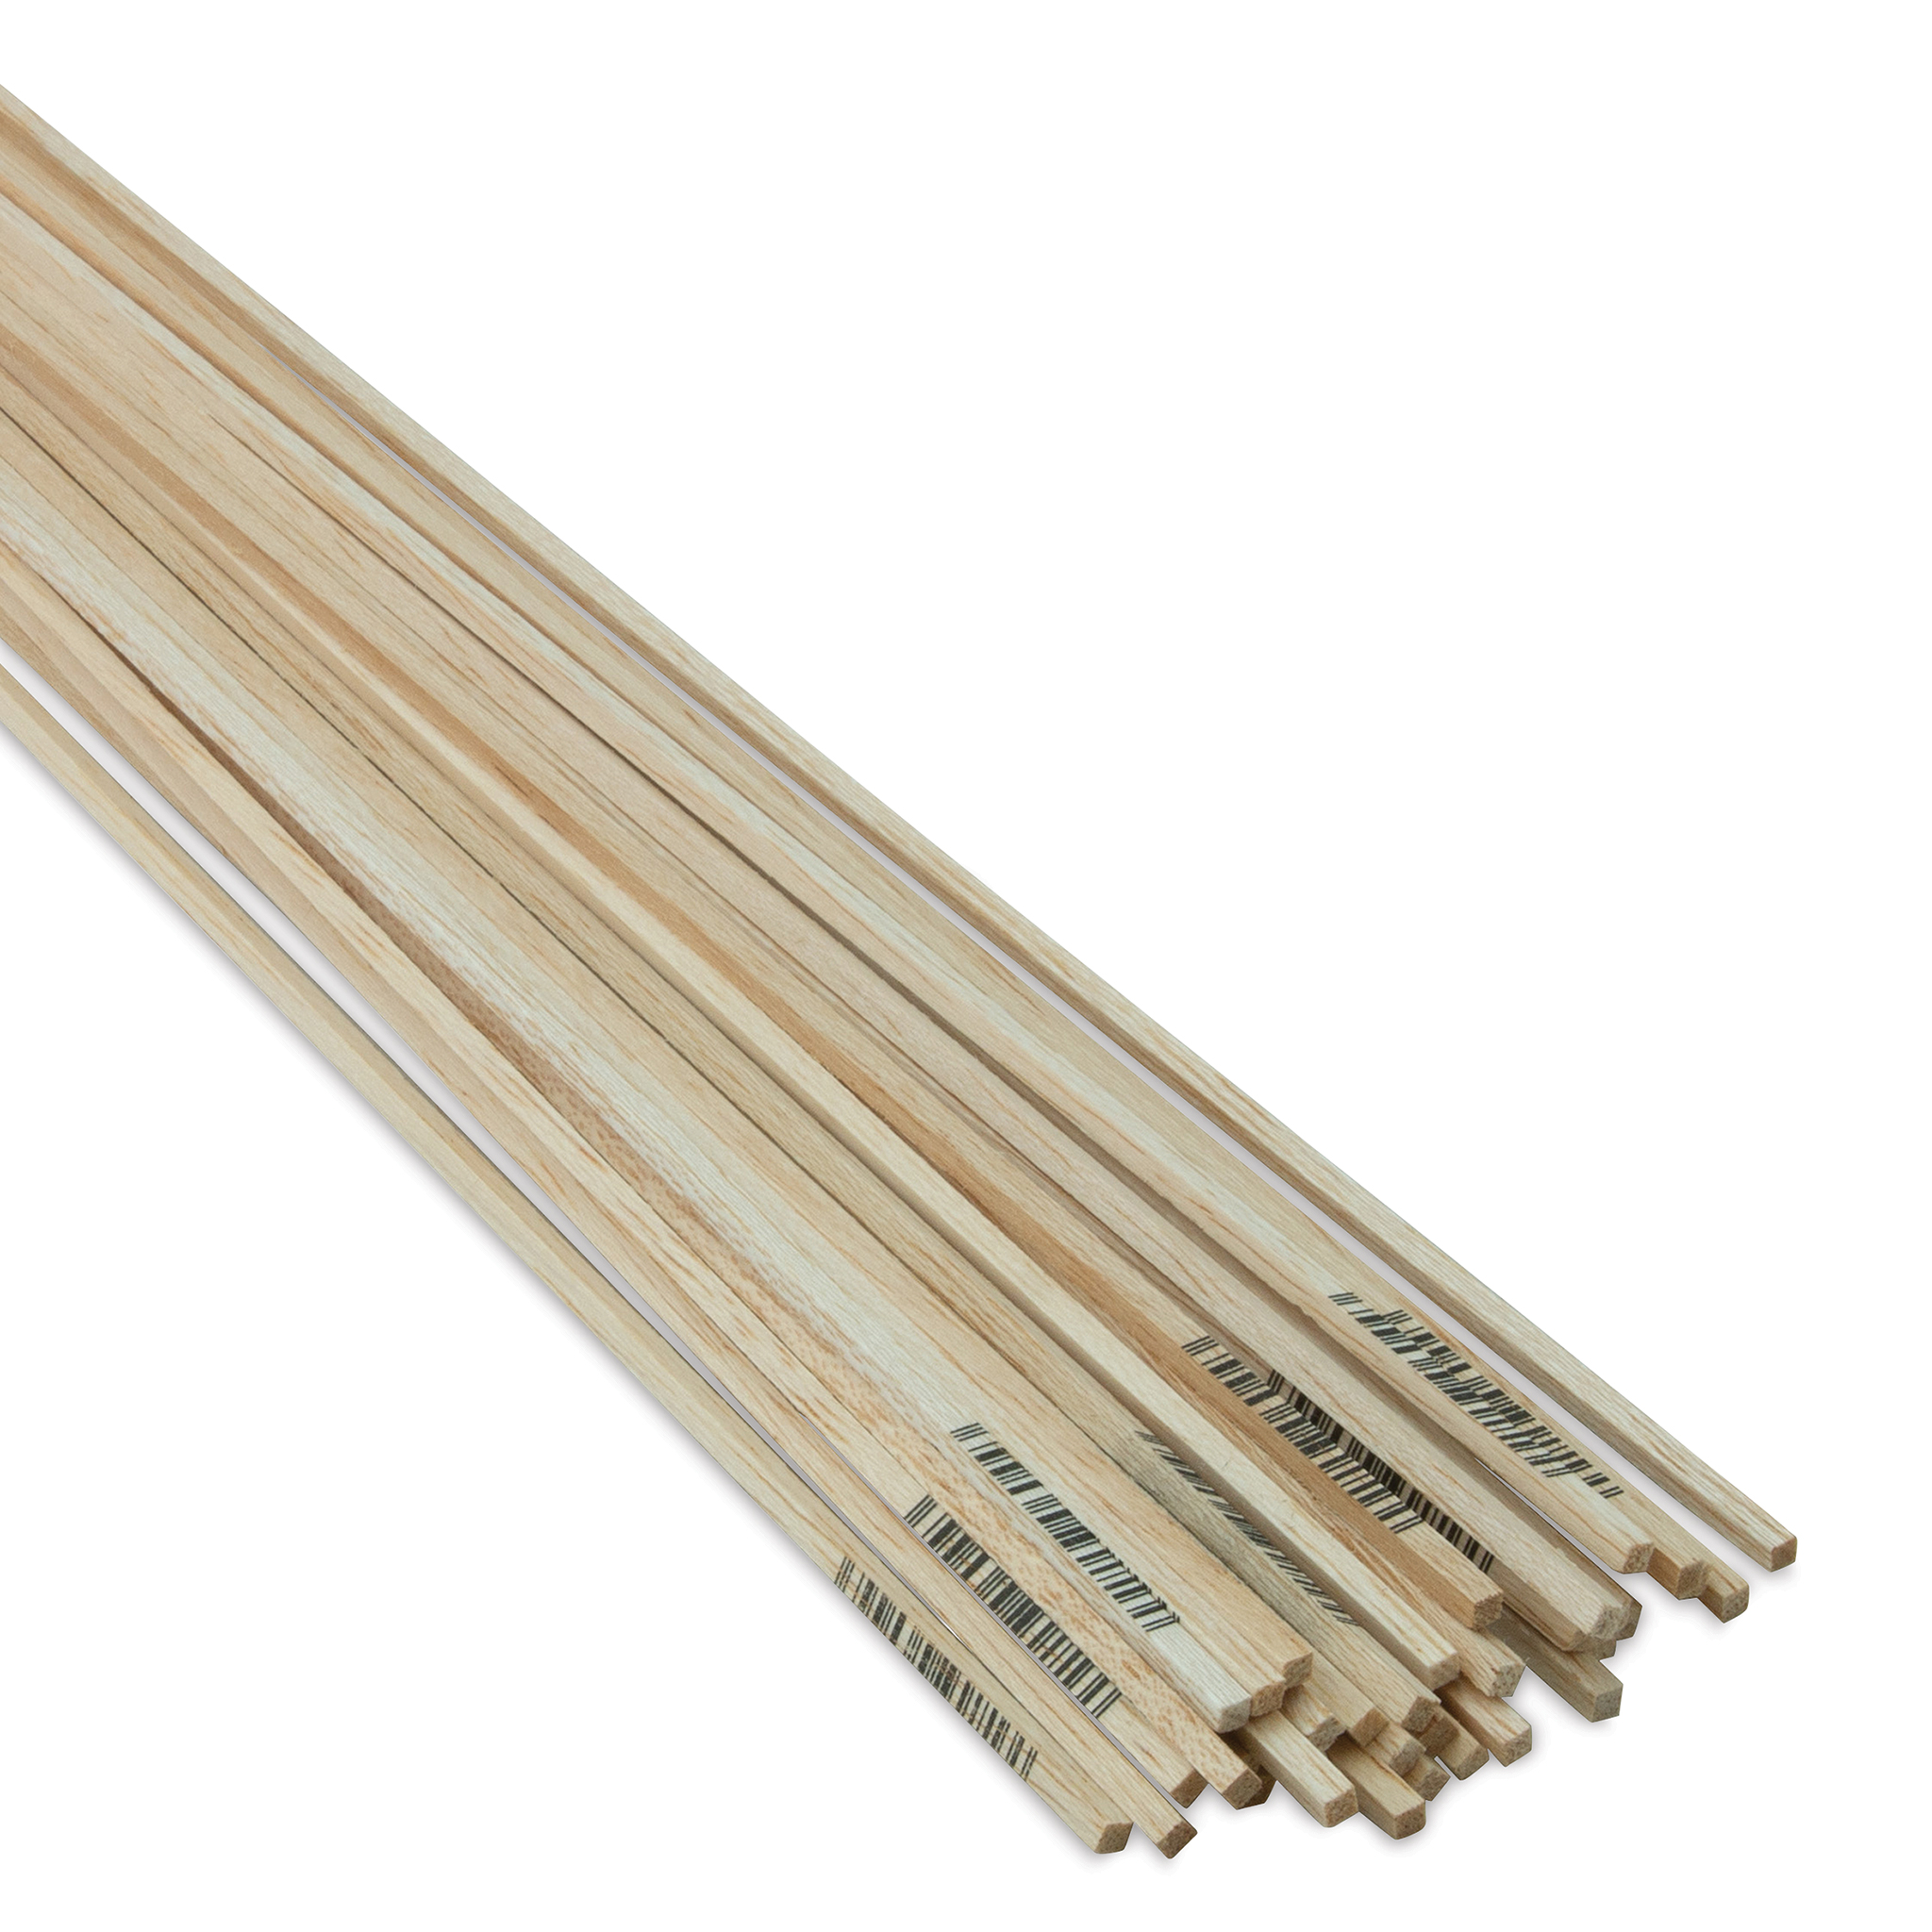 The blue lines designate the thick balsa wood sticks, black lines